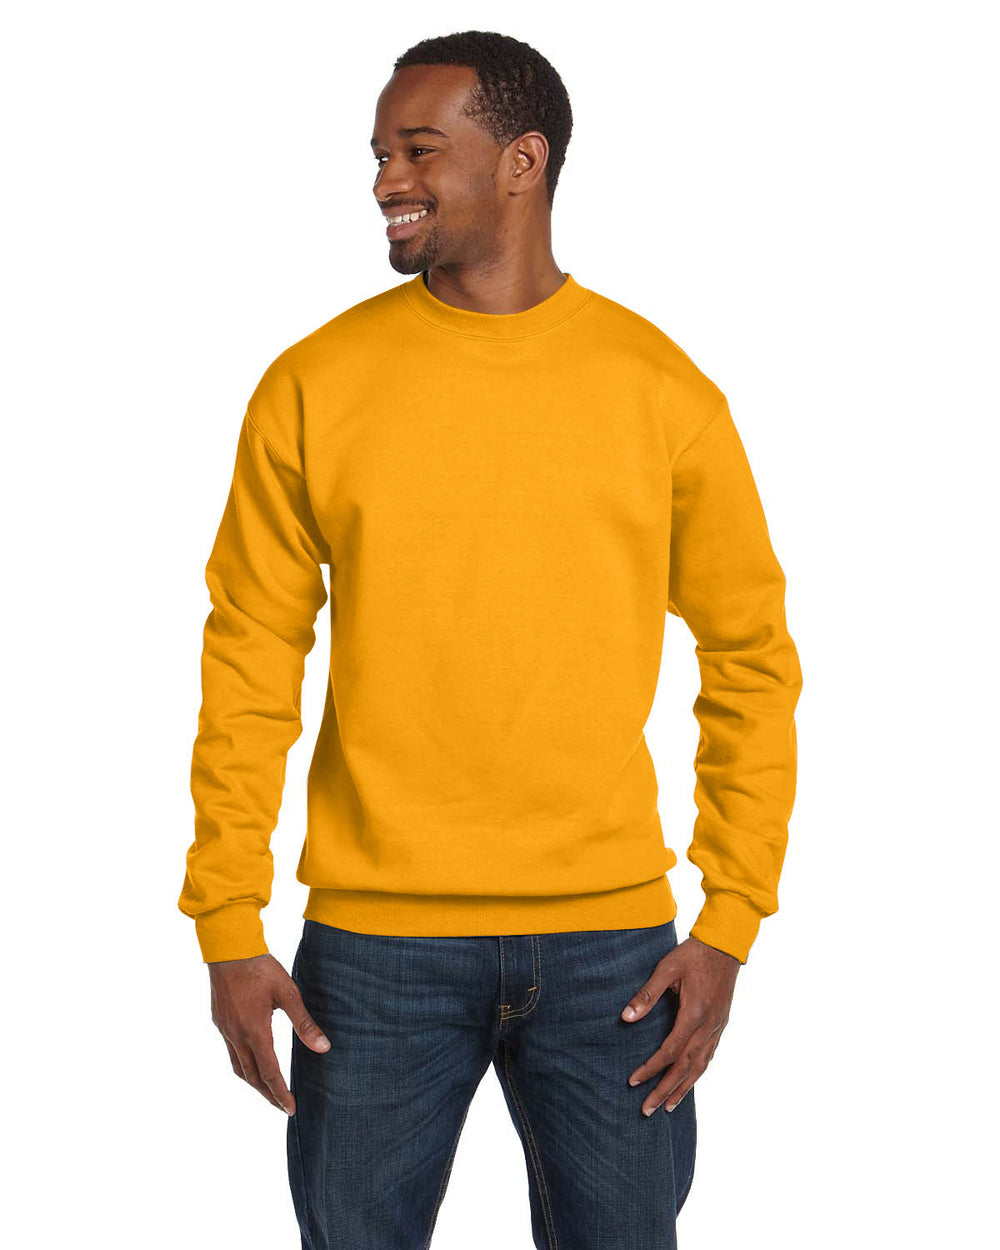 Sweatshirts  Fleece – Shirts In Bulk